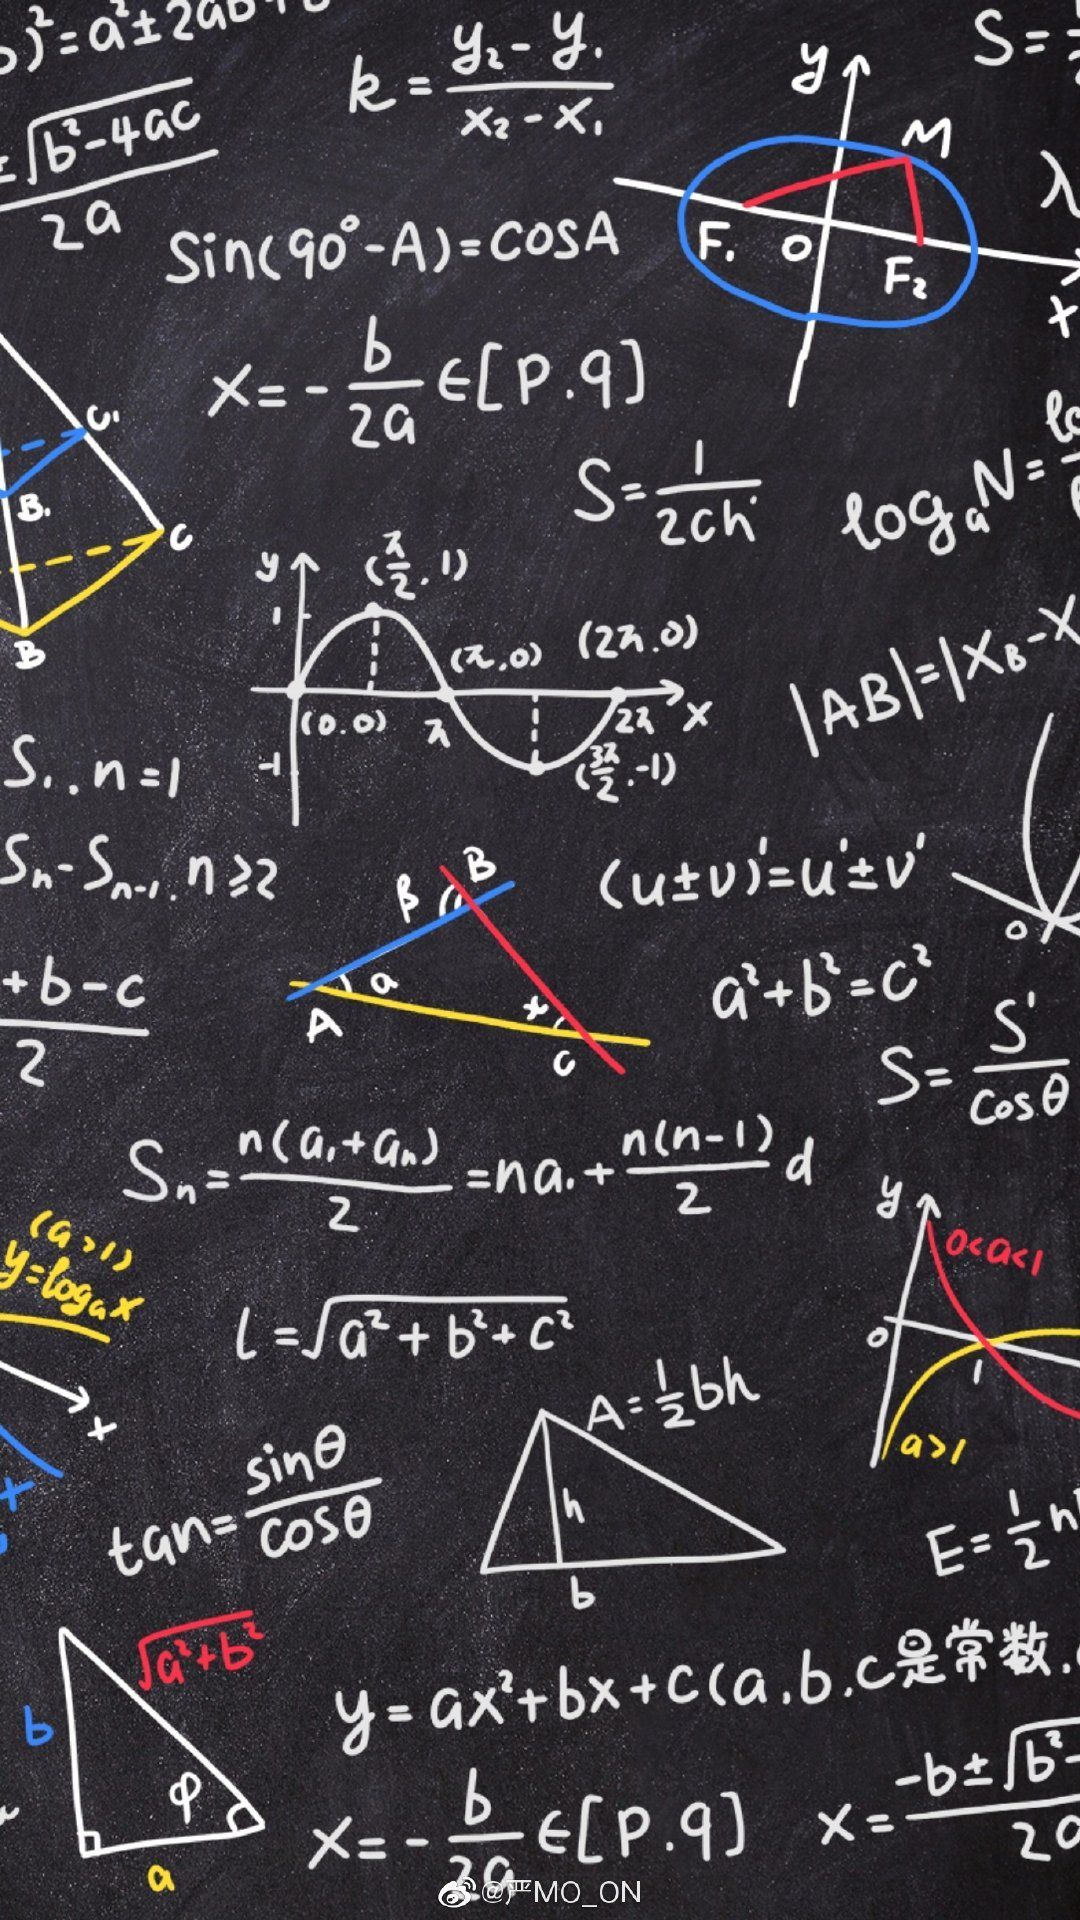 Math equations on a blackboard - Math